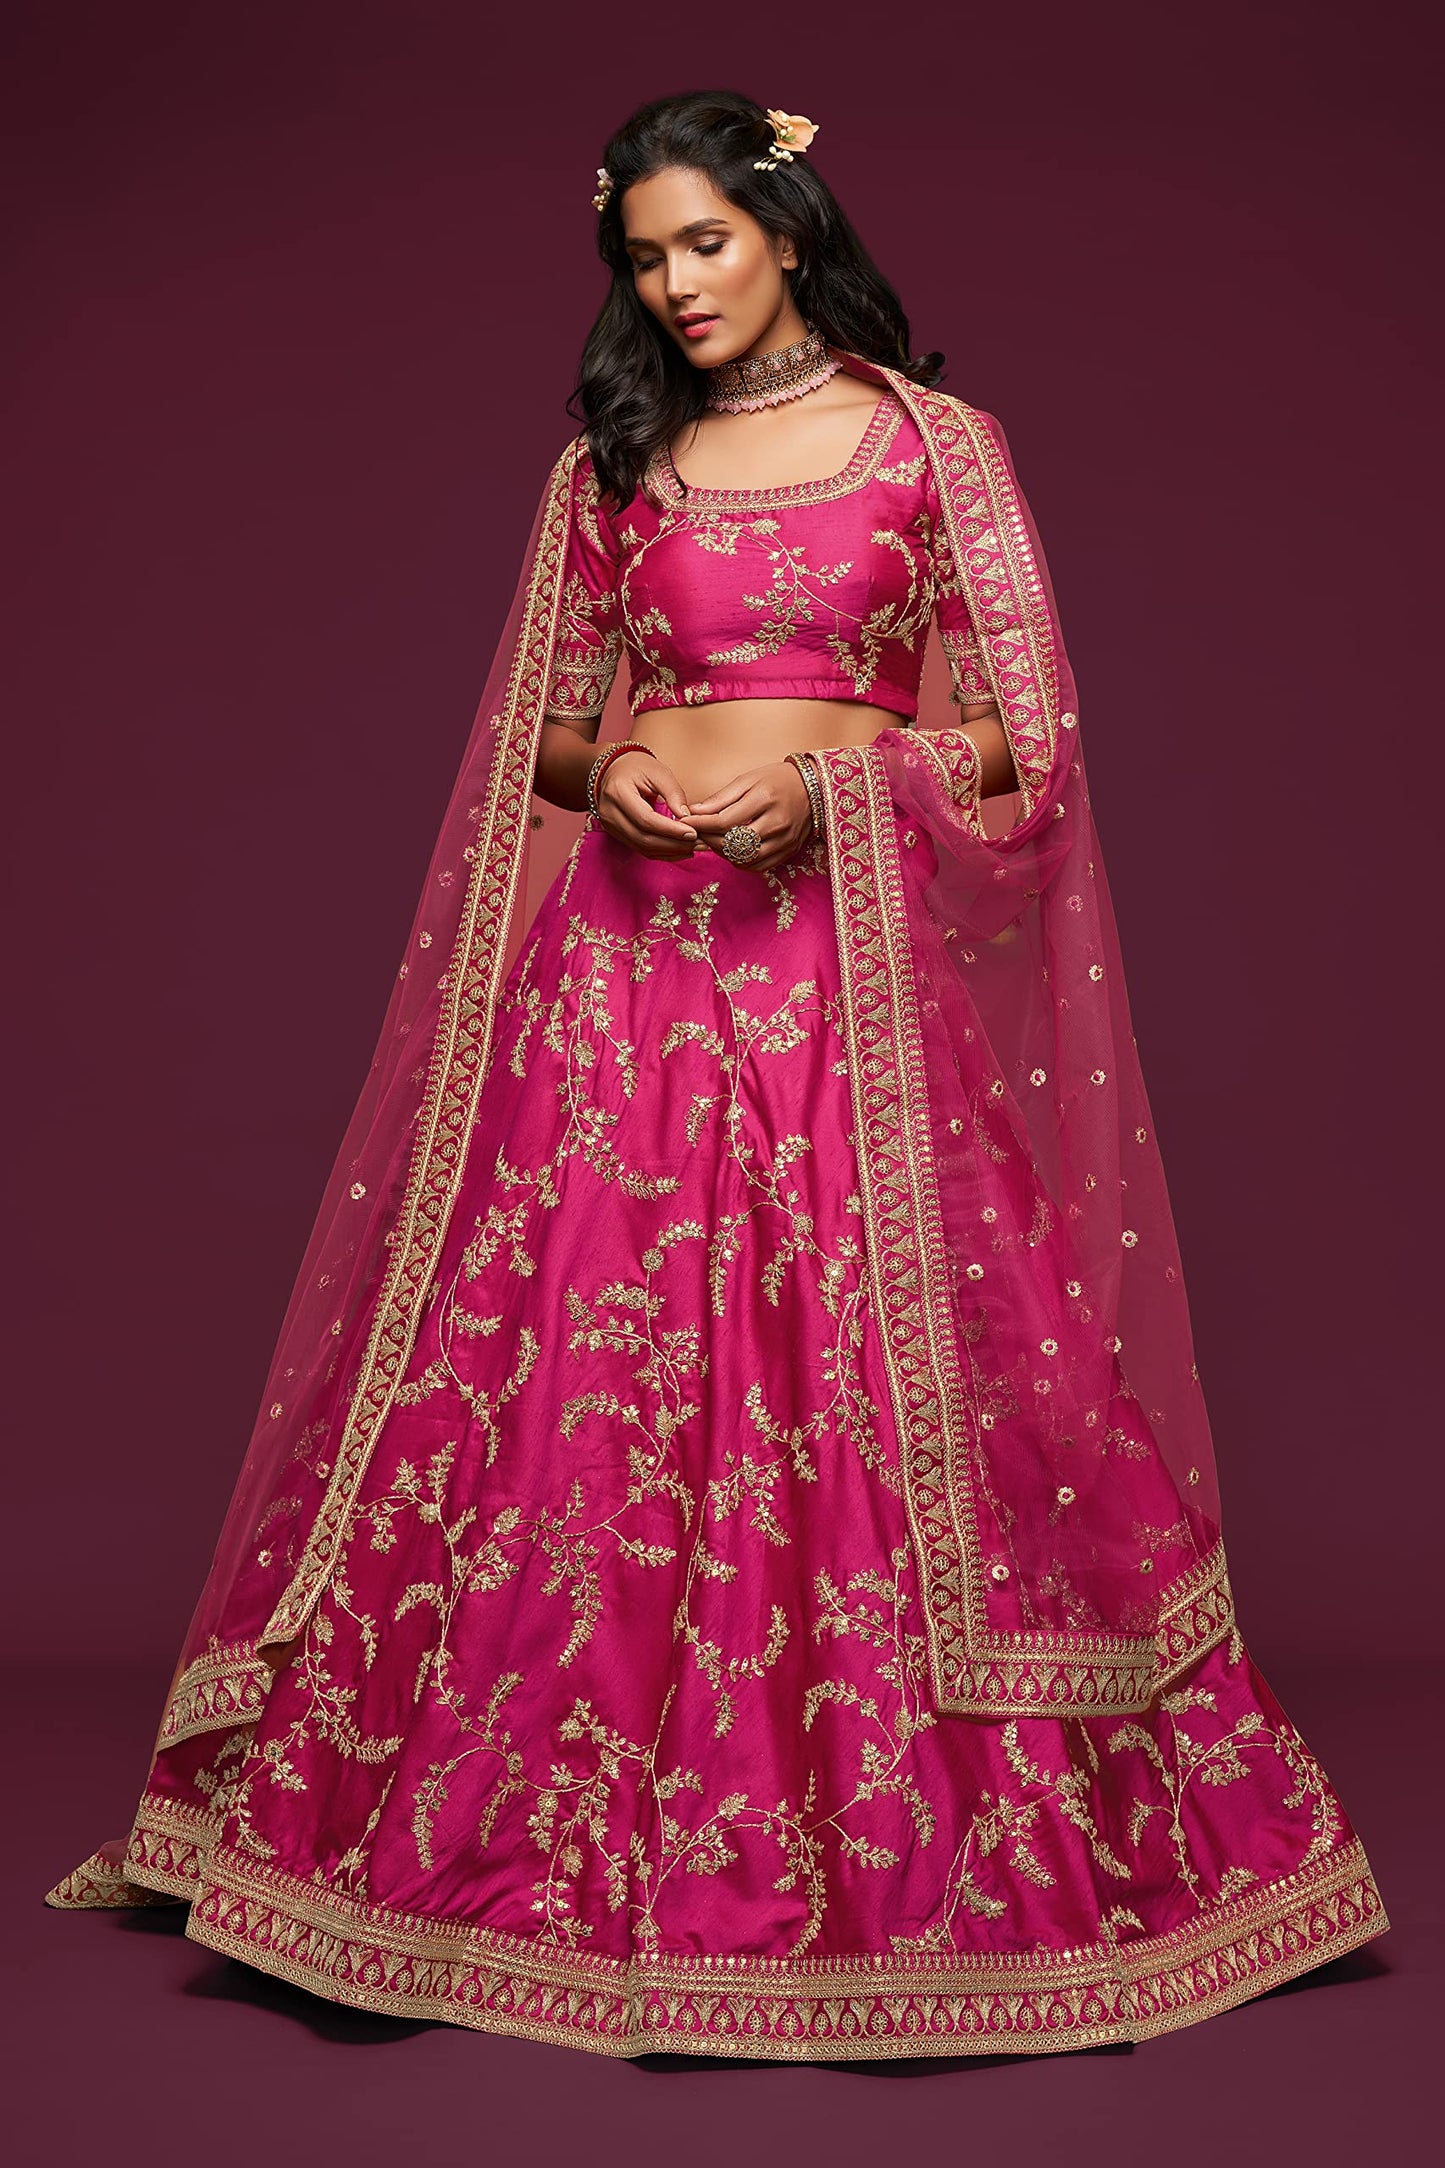 Zeel Clothing Women's Art Silk Semi-Stitched Lehenga Choli with Dupatta (7806-Pink-Wedding-Bridal-Latest-Lehenga; Free Size) (Pink)